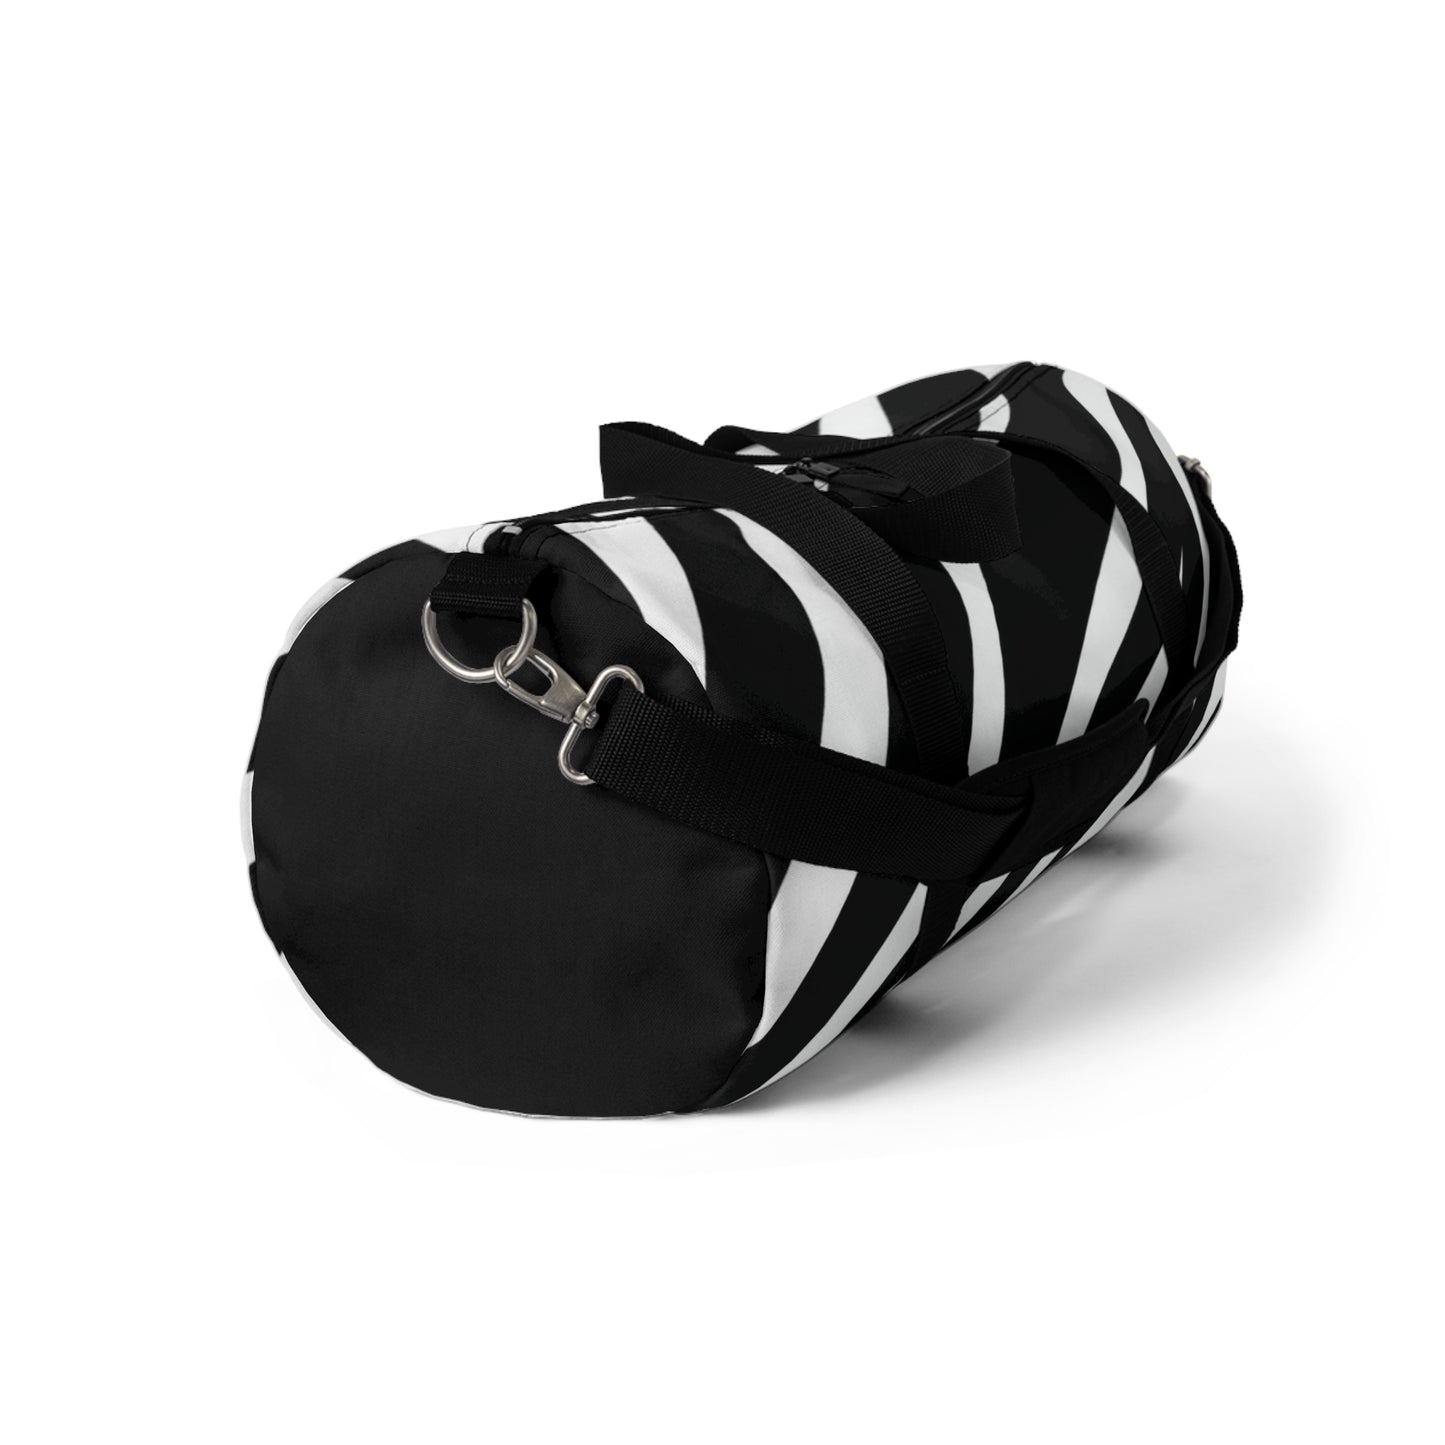 Duffel Zebra Bag